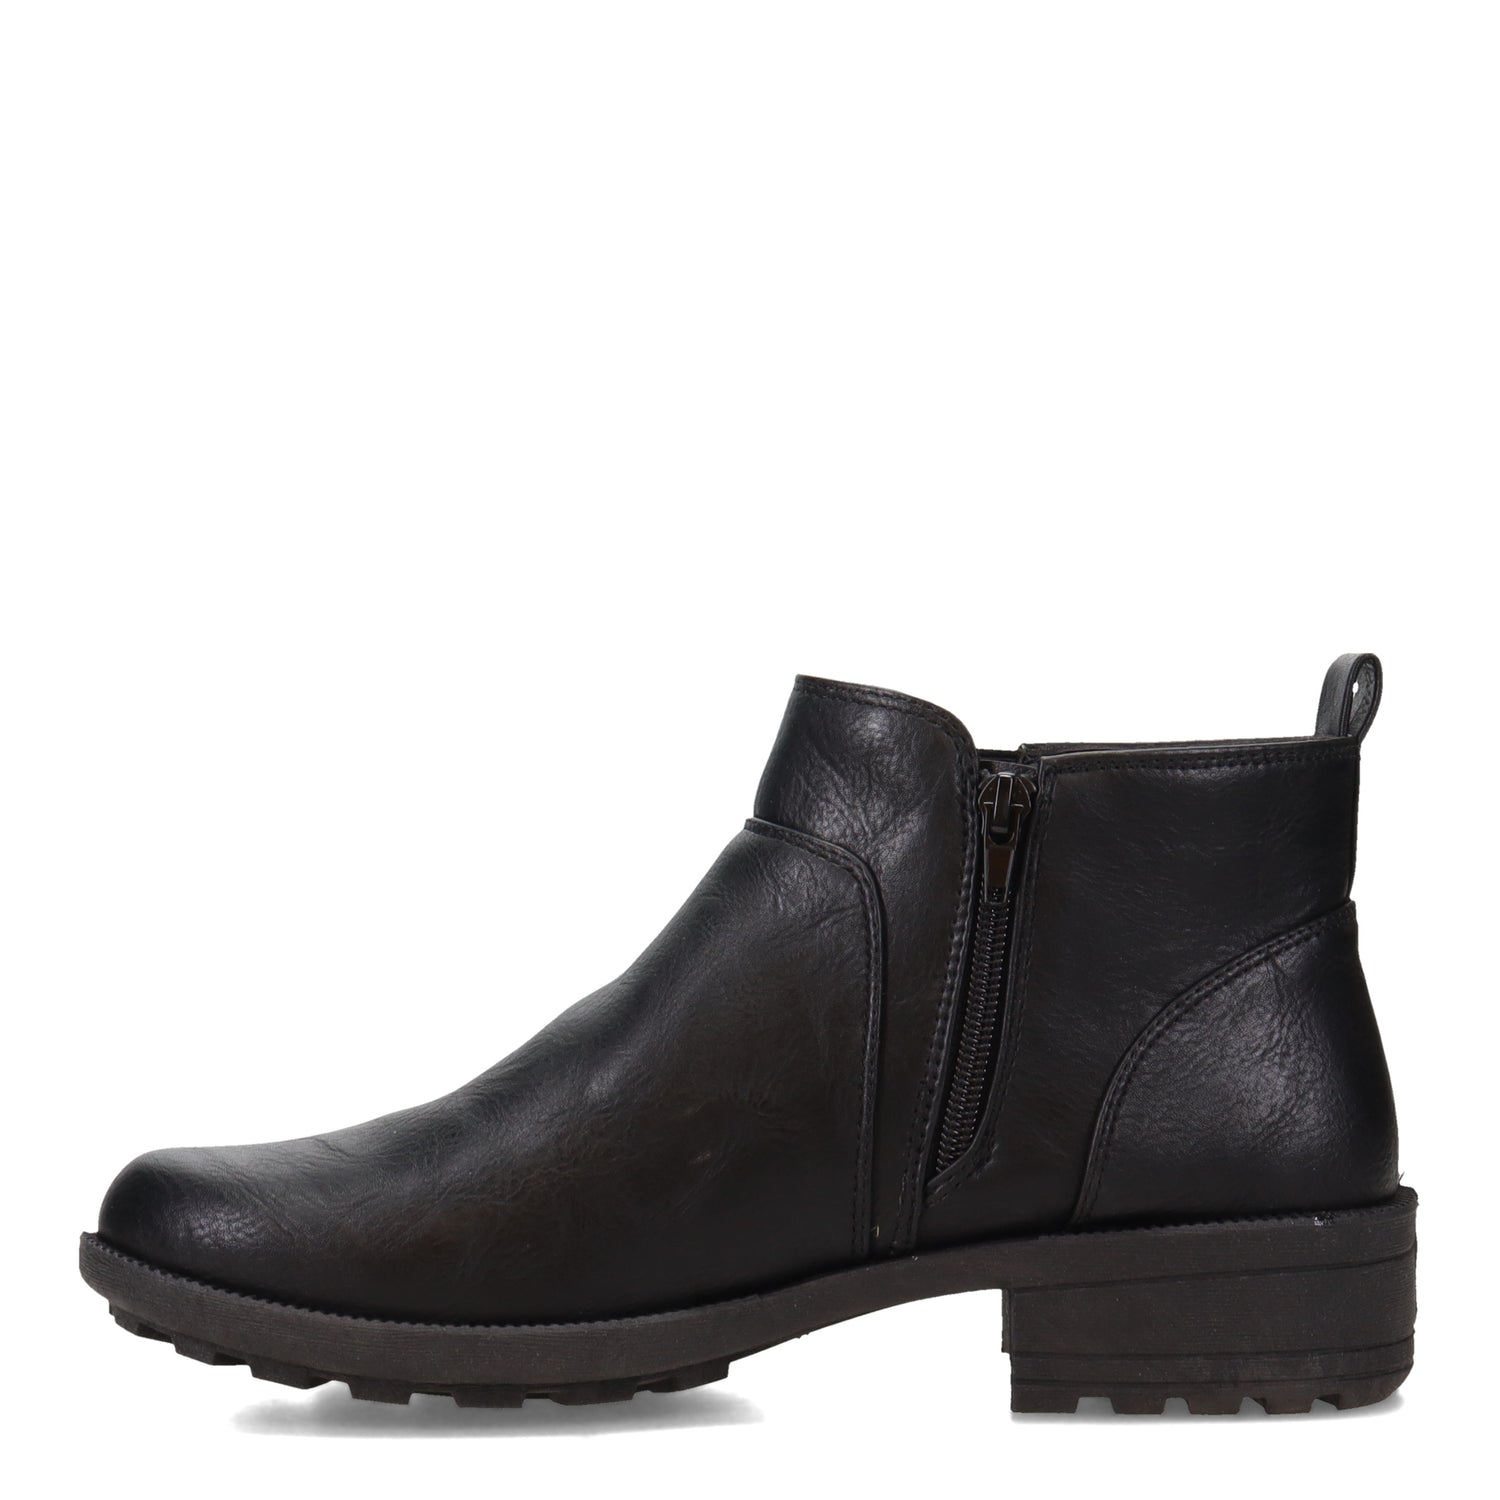 Peltz Shoes  Women's Easy Street Amiga Boot BLACK 31-7911